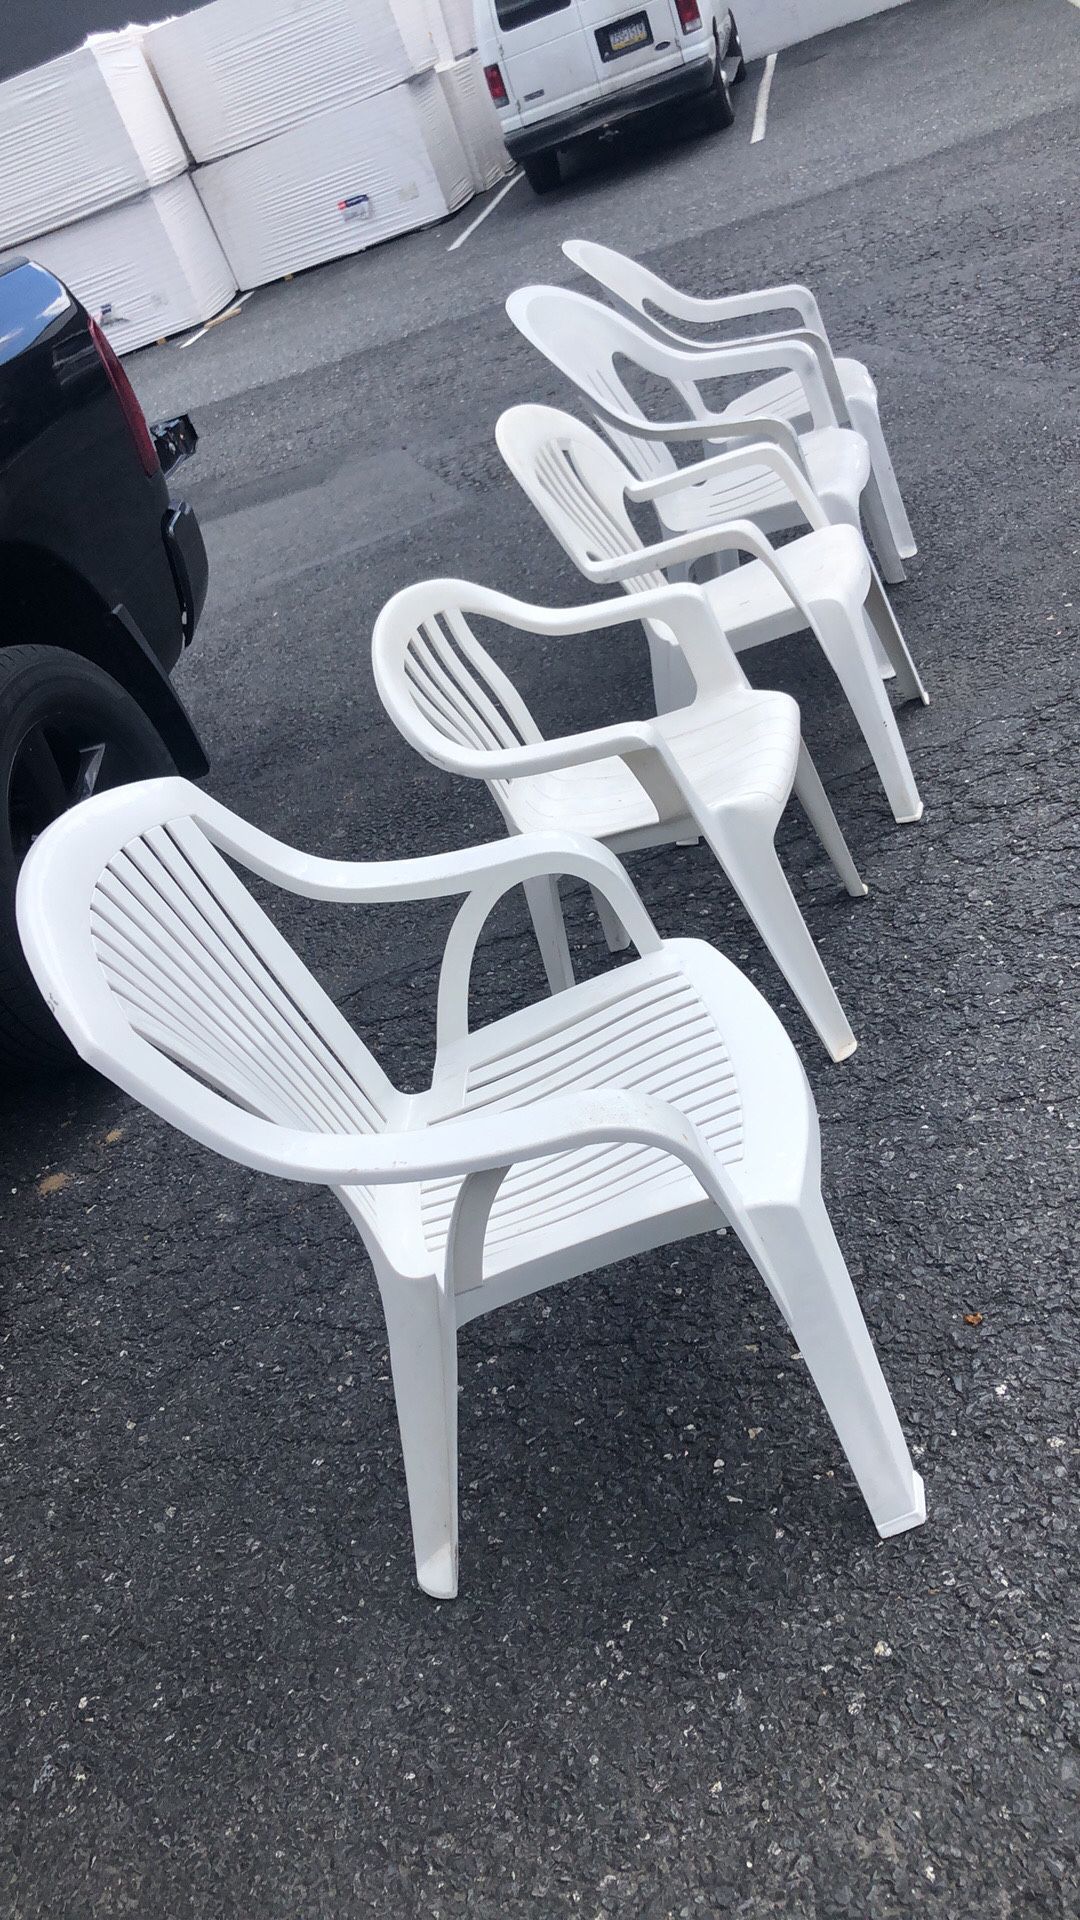 5 Plastic chairs